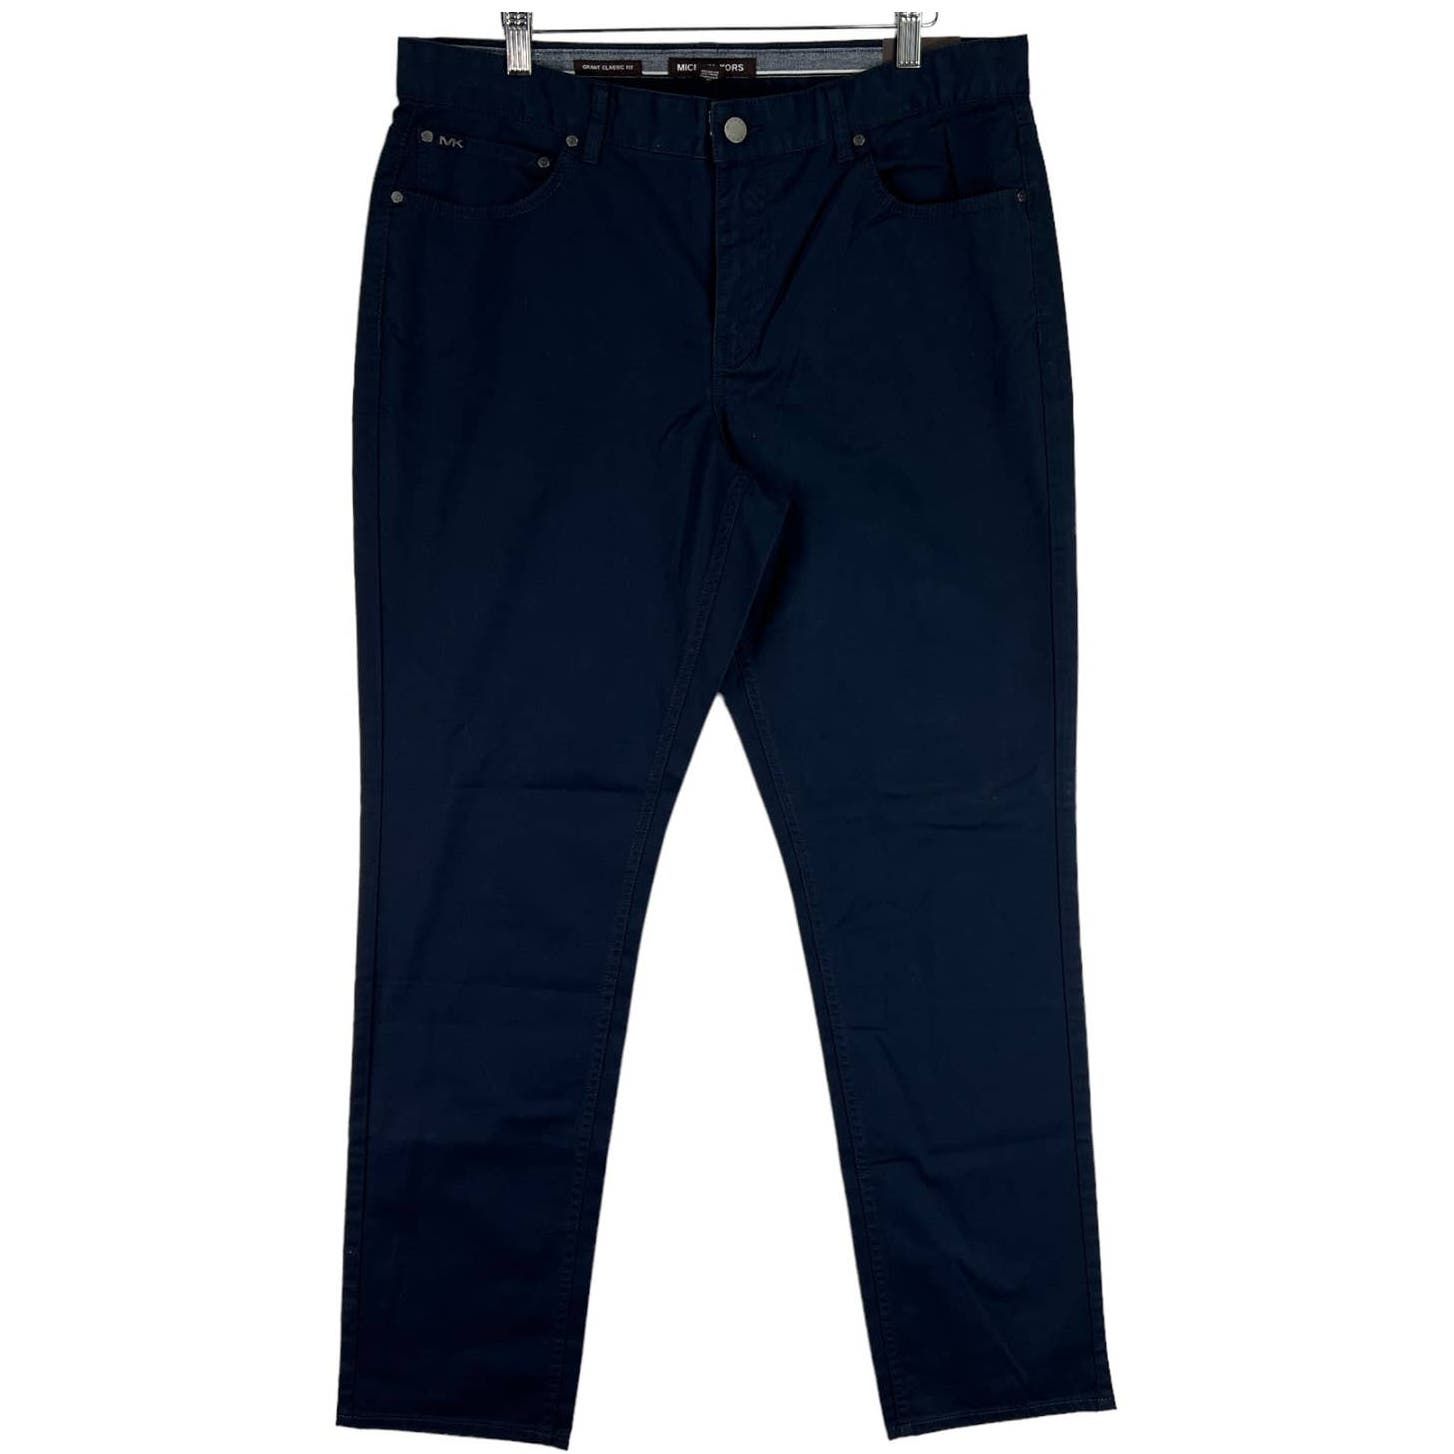 Michael Kors Men Midnight Blue Pants US 34x32 Classic Fit Slim